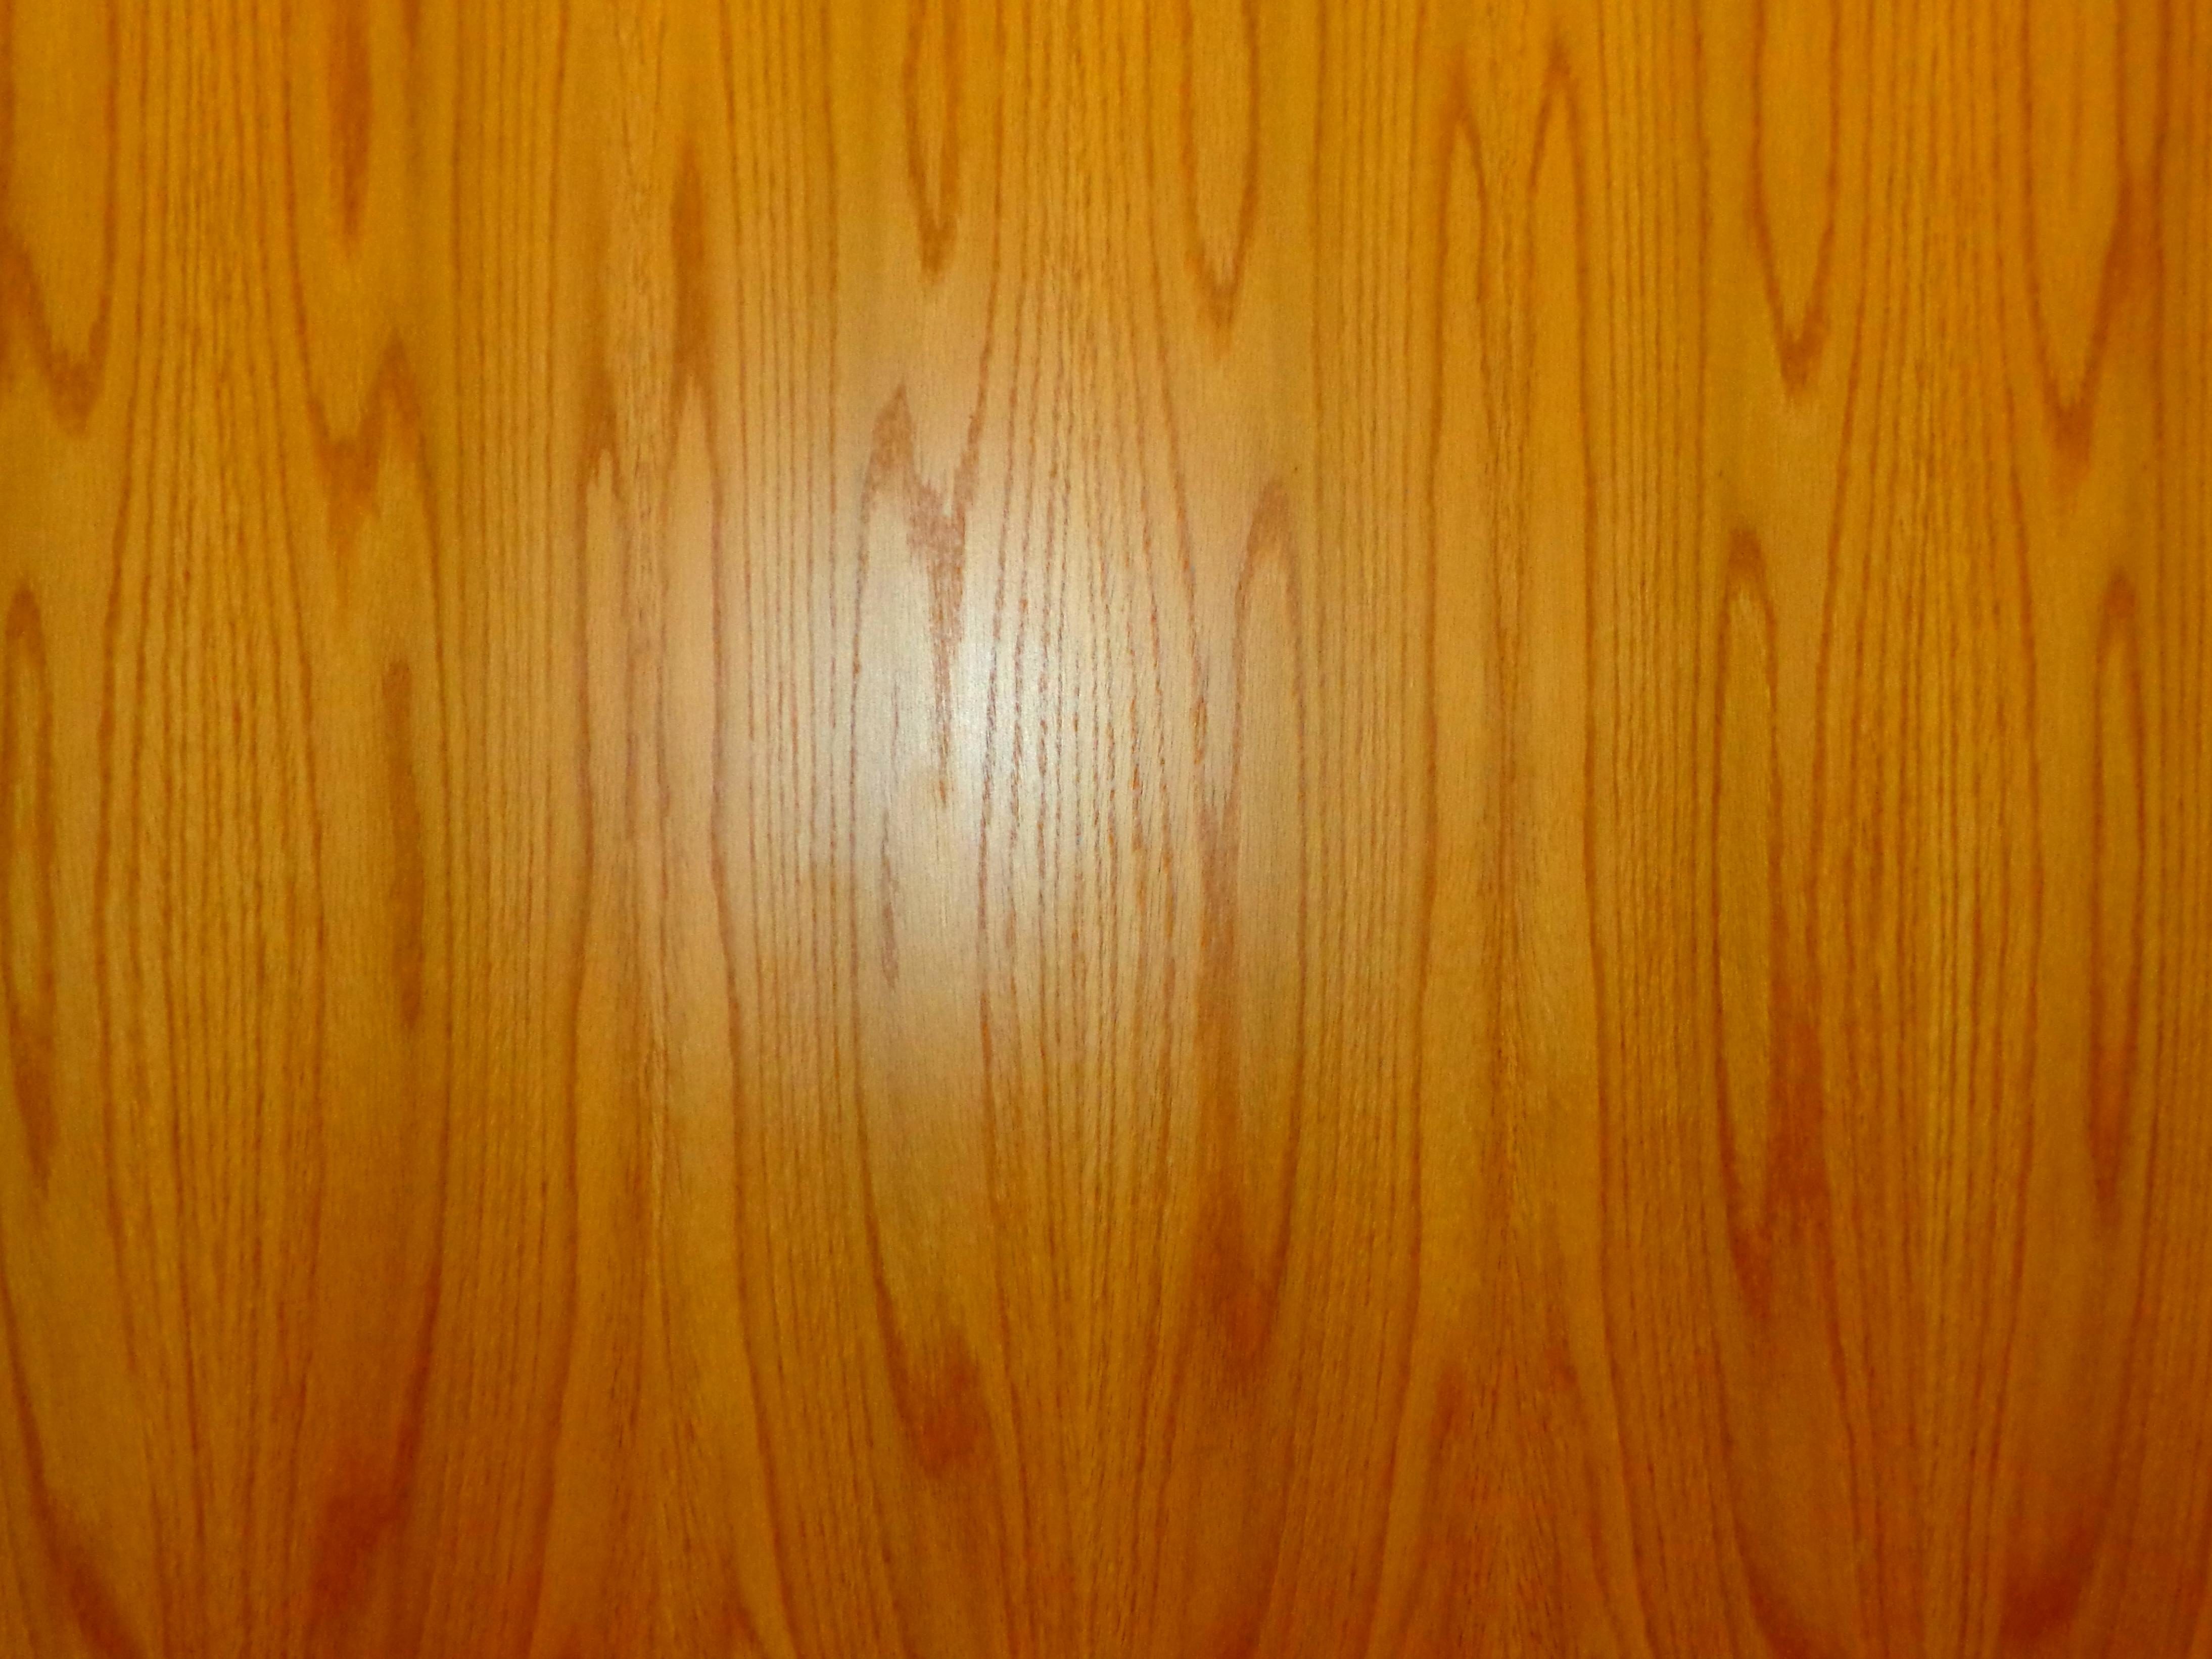 floor texture of Free wood, picture: grain, texture, parquet